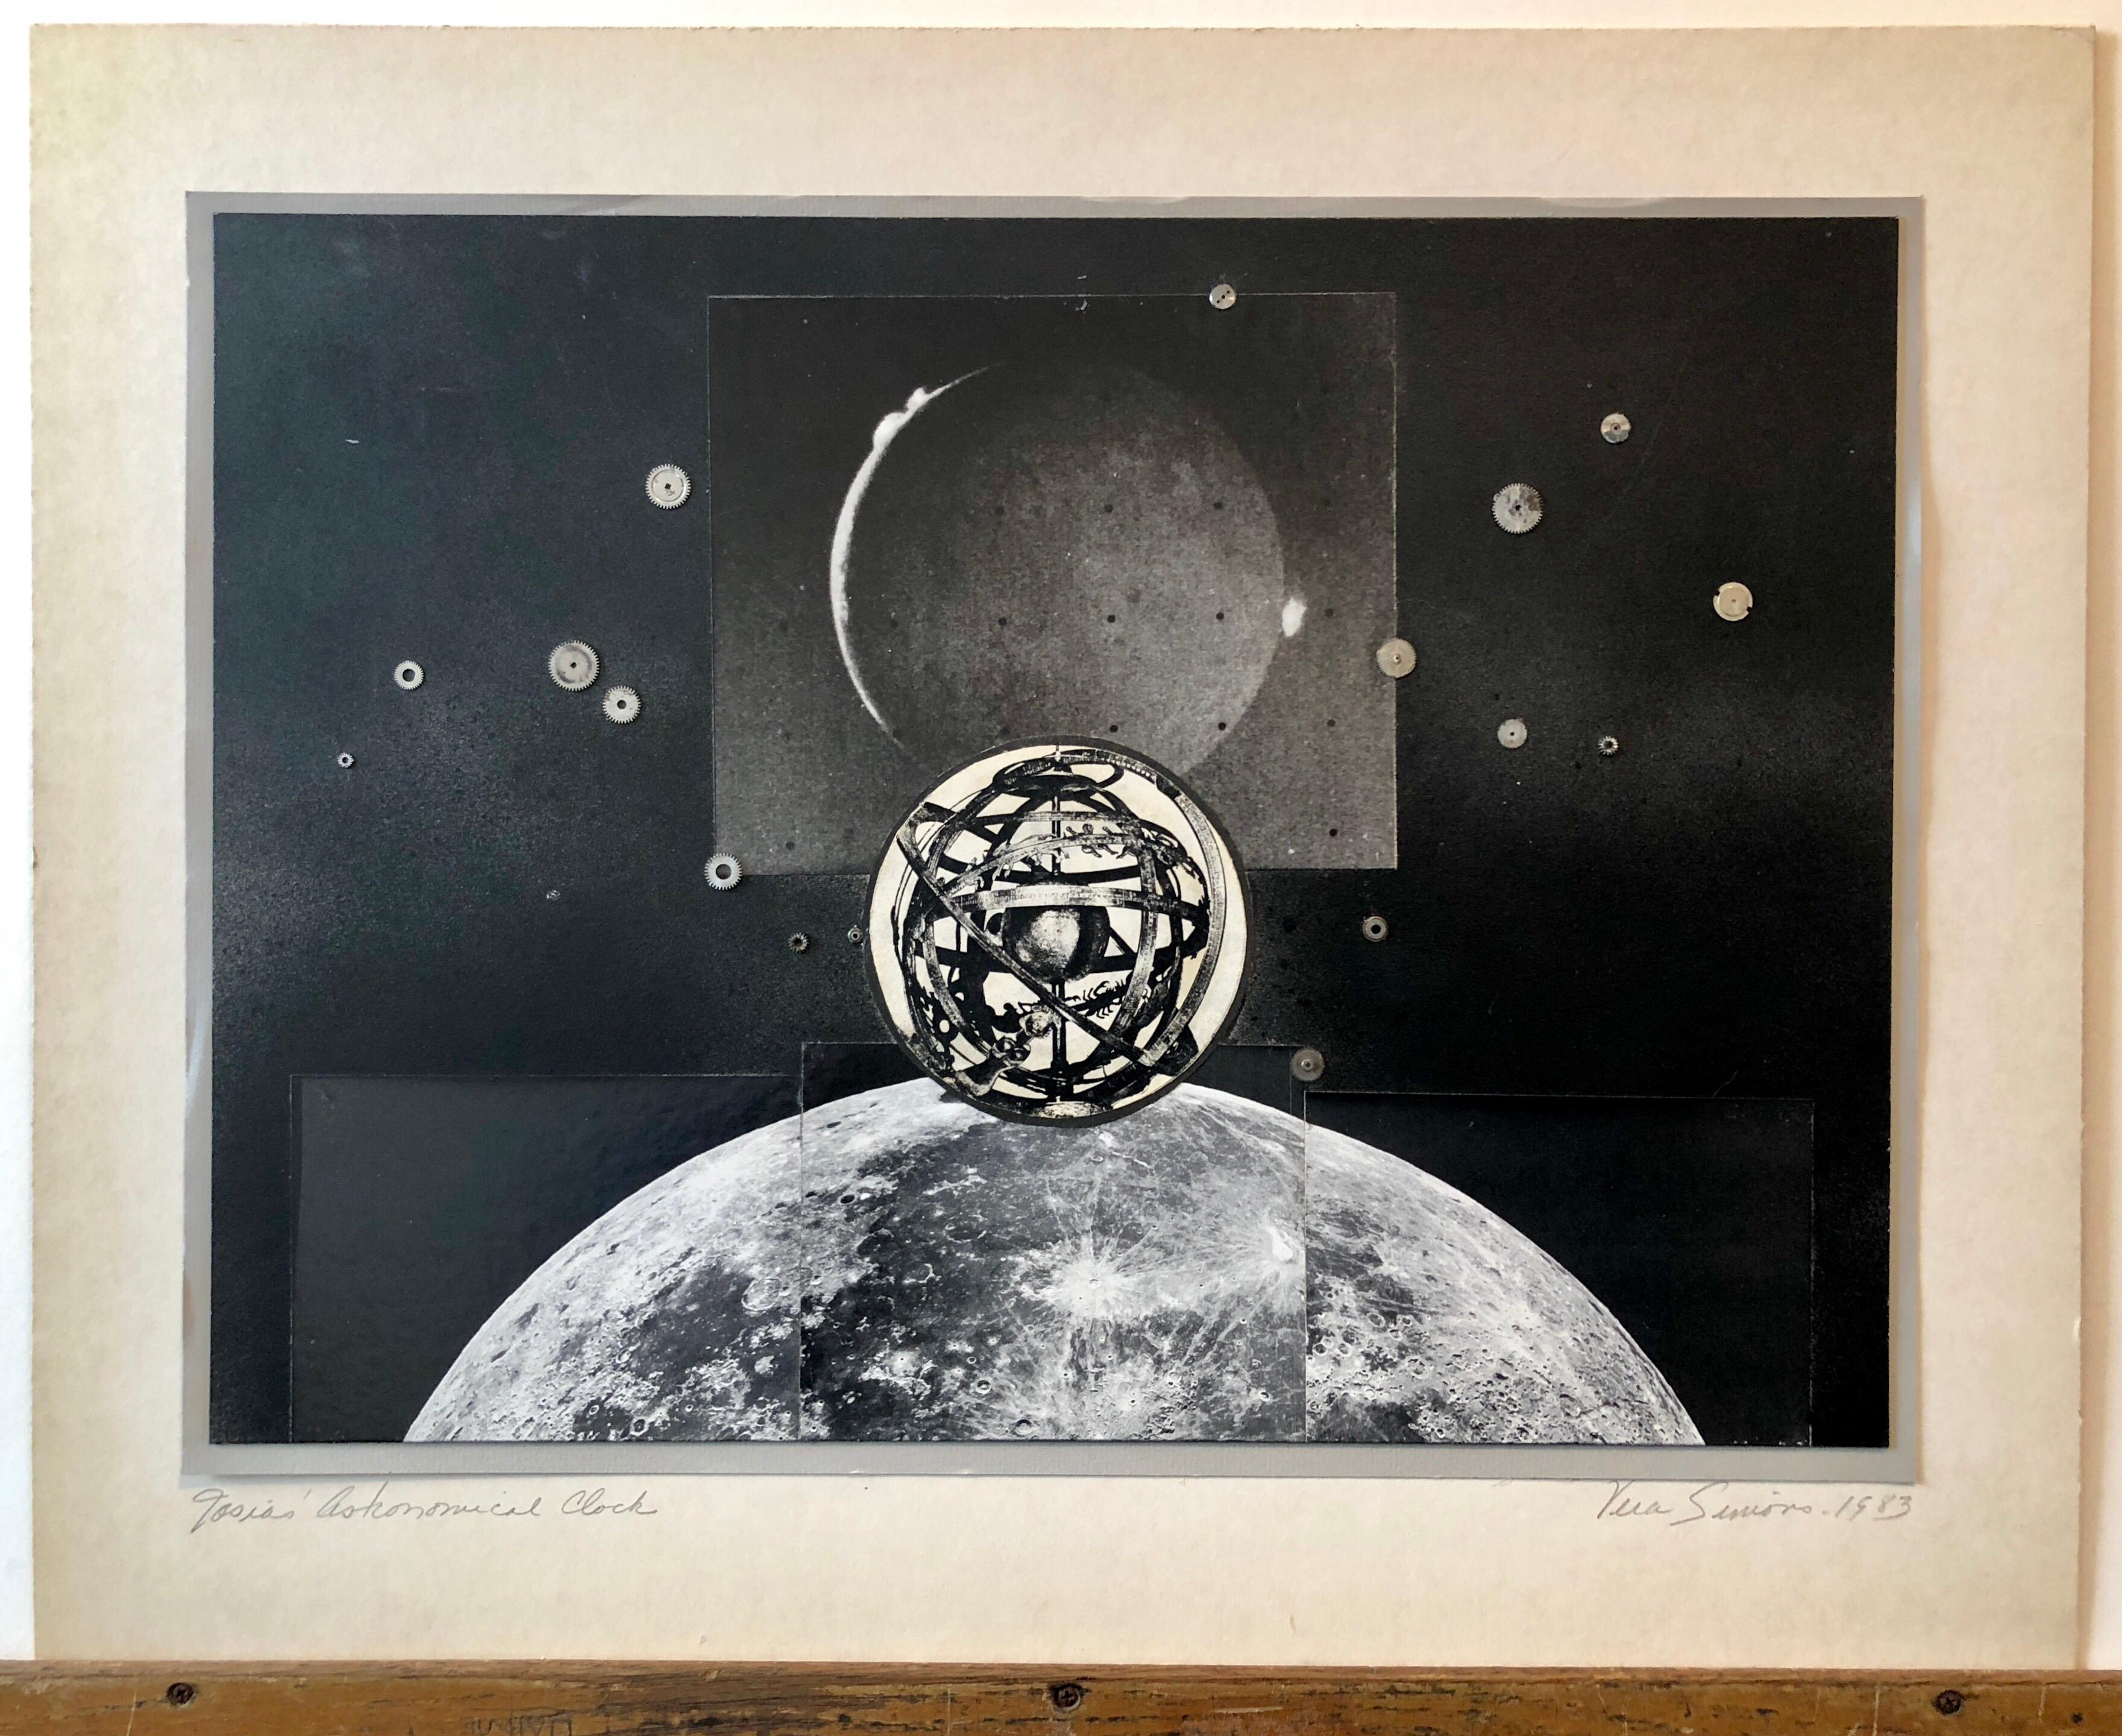 Josias Astronomical Clock Watch Parts Assemblage Photo Planet Collage Photograph 2